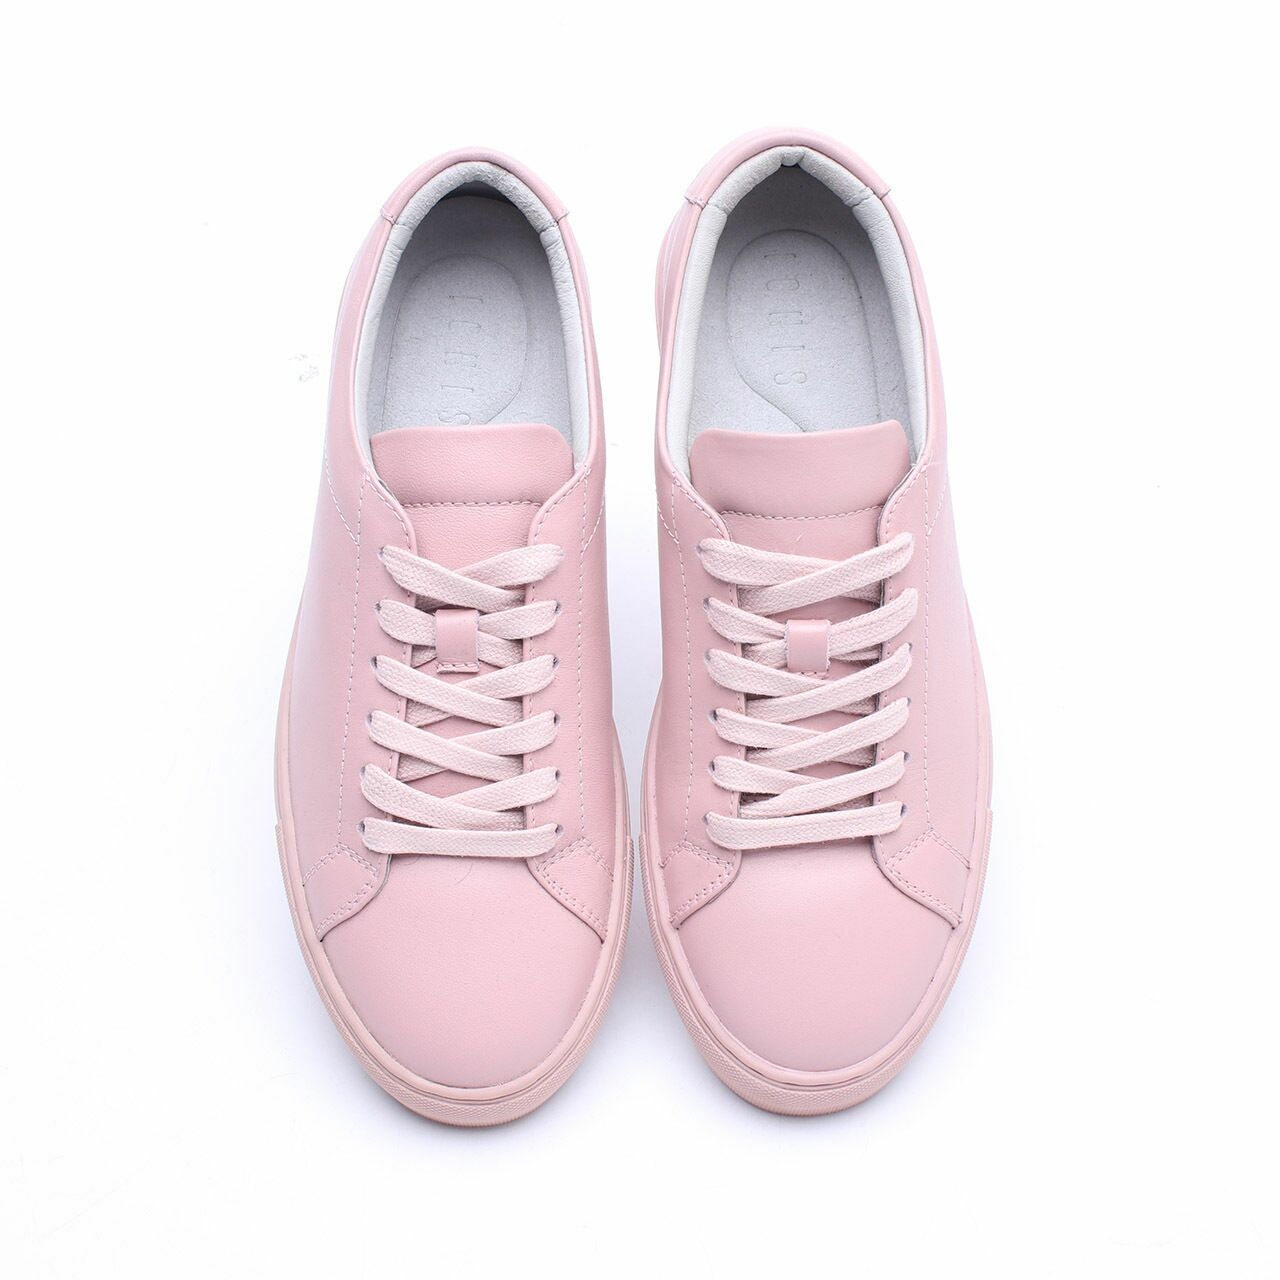 Ignis Adagio Blush Pink Sneakers